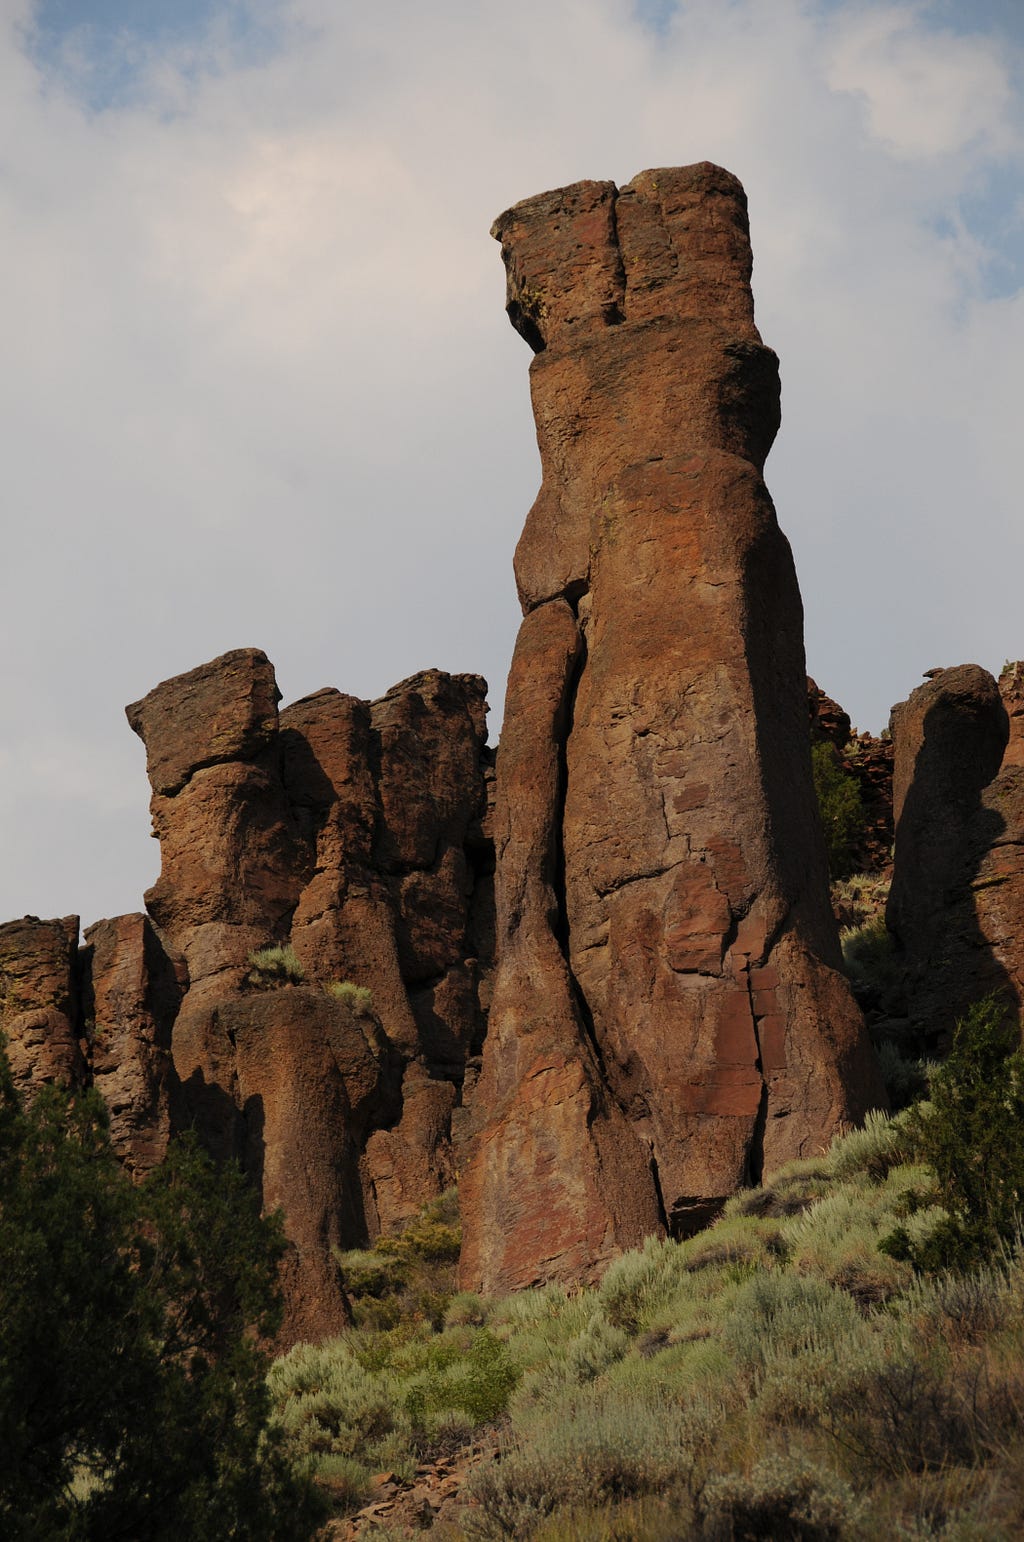 “Fairy chimneys” in Jarbidge Canyon in remote northeastern Nevada.